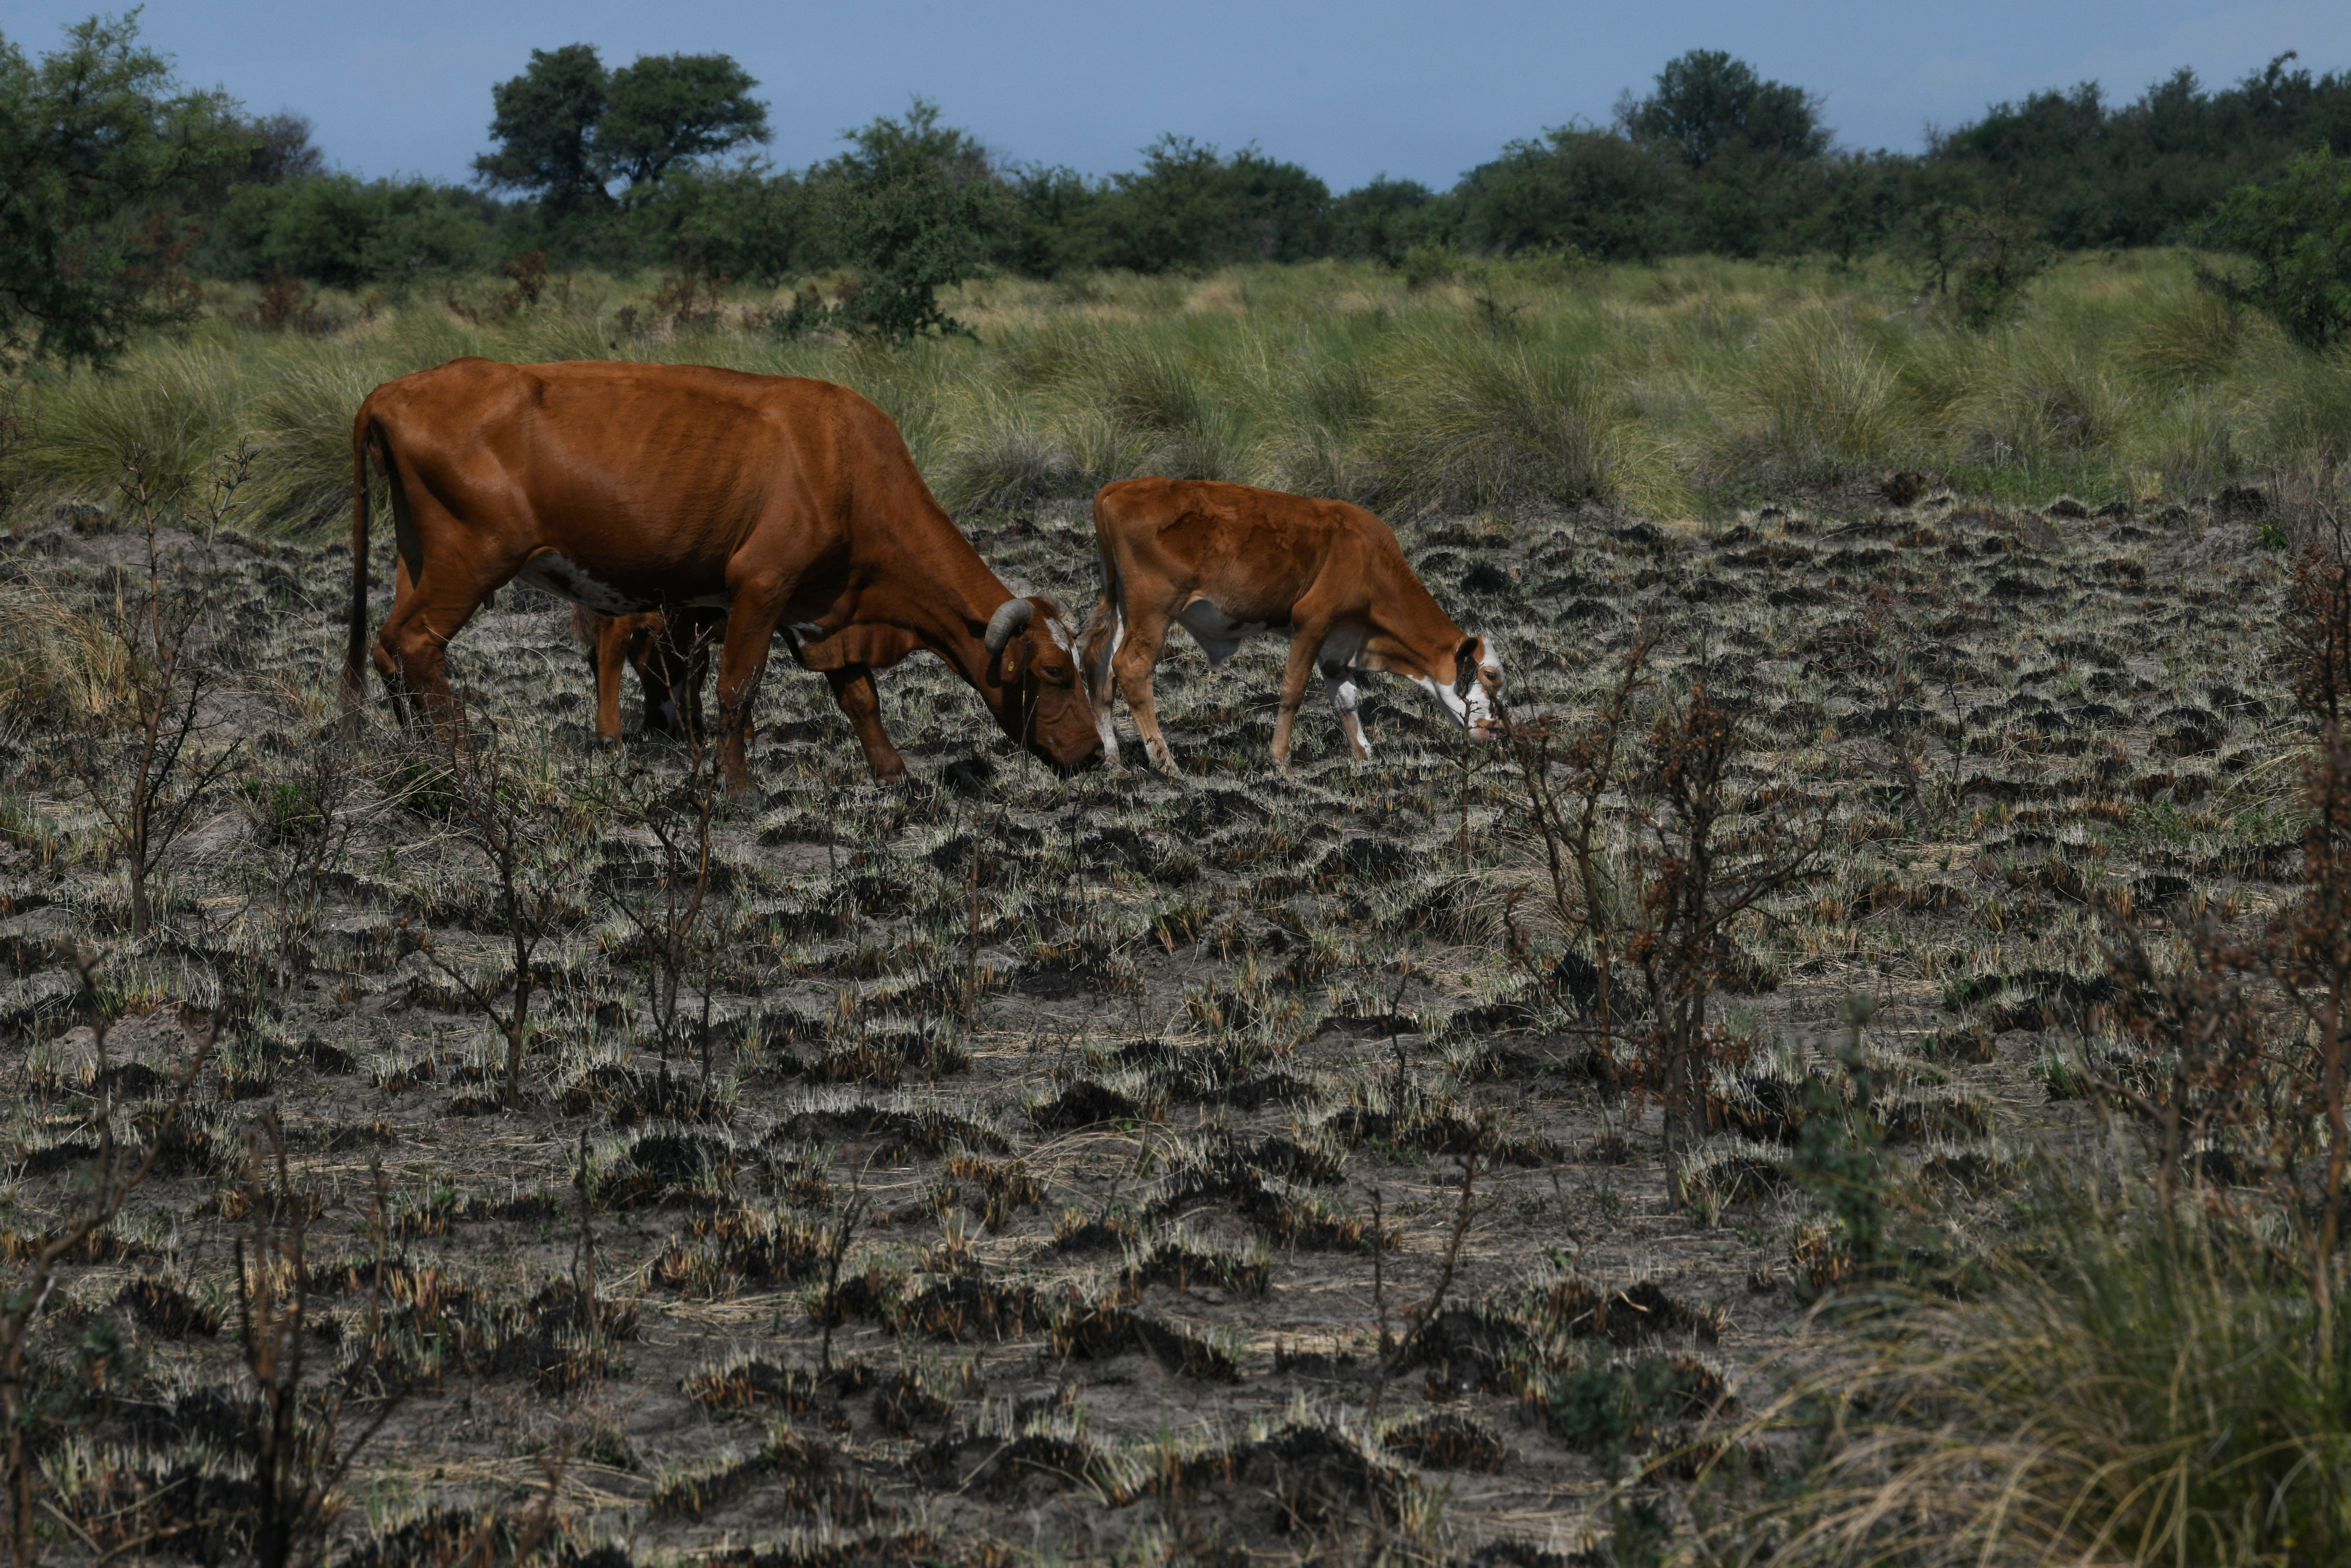 Cattle graze on a sparse field in Santa Fe province, Argentina, Wednesday, Jan. 18, 2023. (Photo: Gustavo Garello, AP)